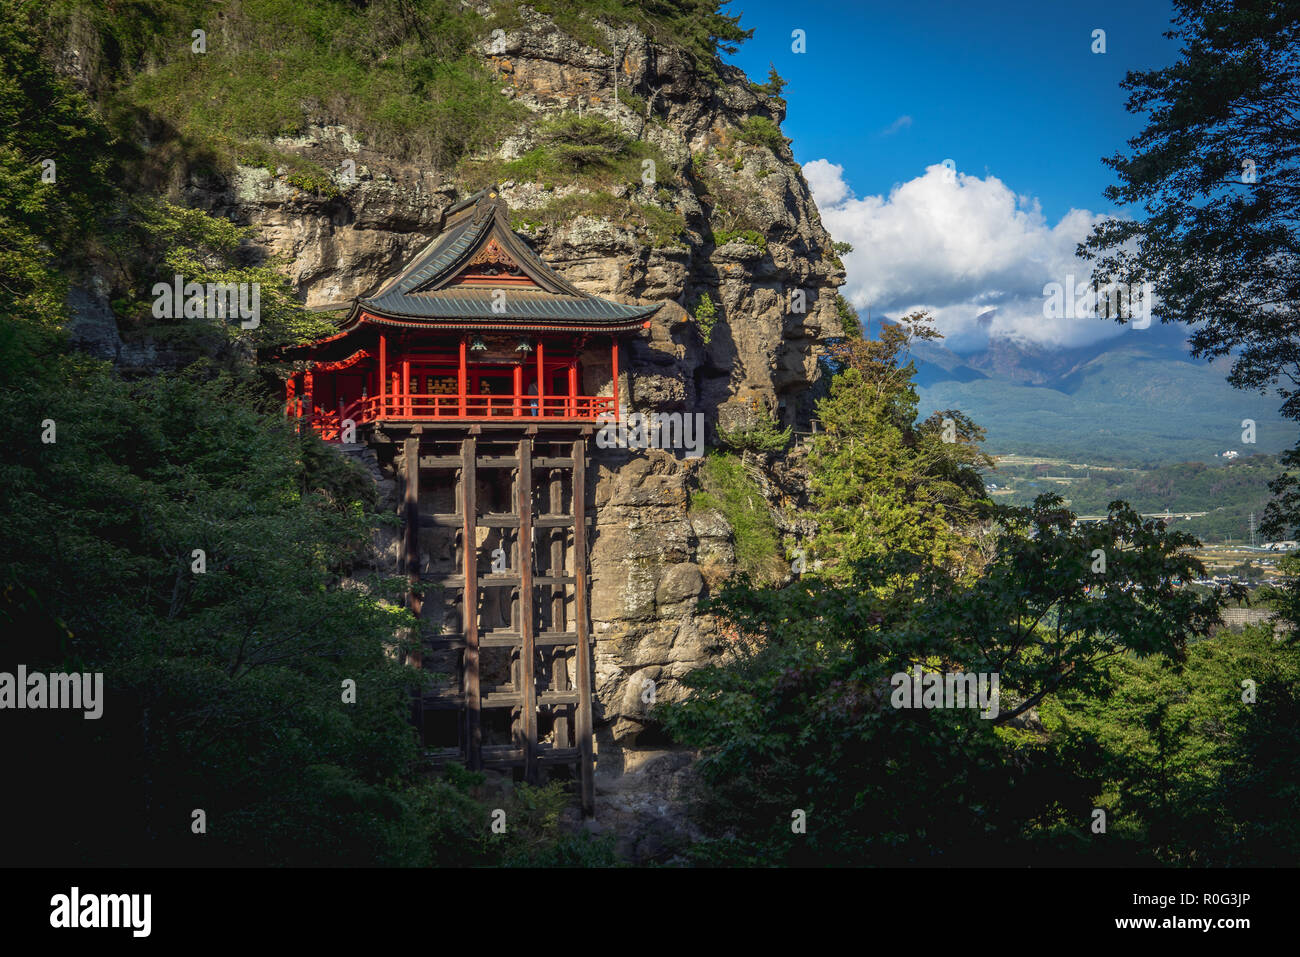 Tempel auf einer Klippe in Komoro, Japan - Präfektur Nagano Stockfoto